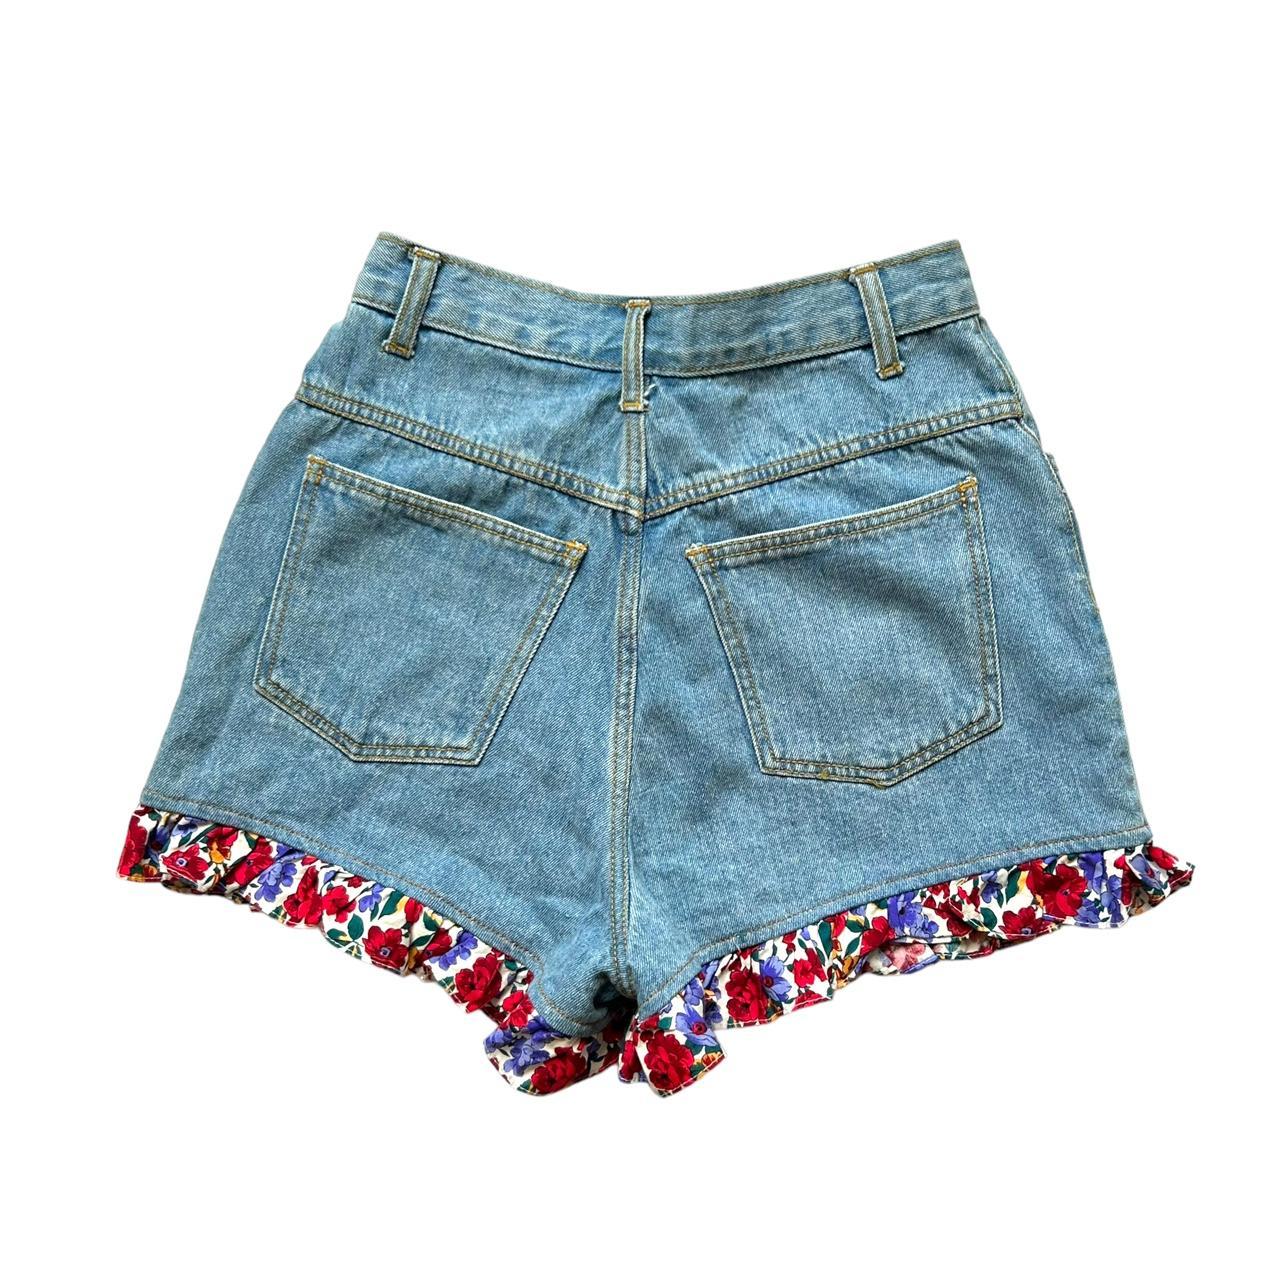 90s floral ruffle trim shorts XS